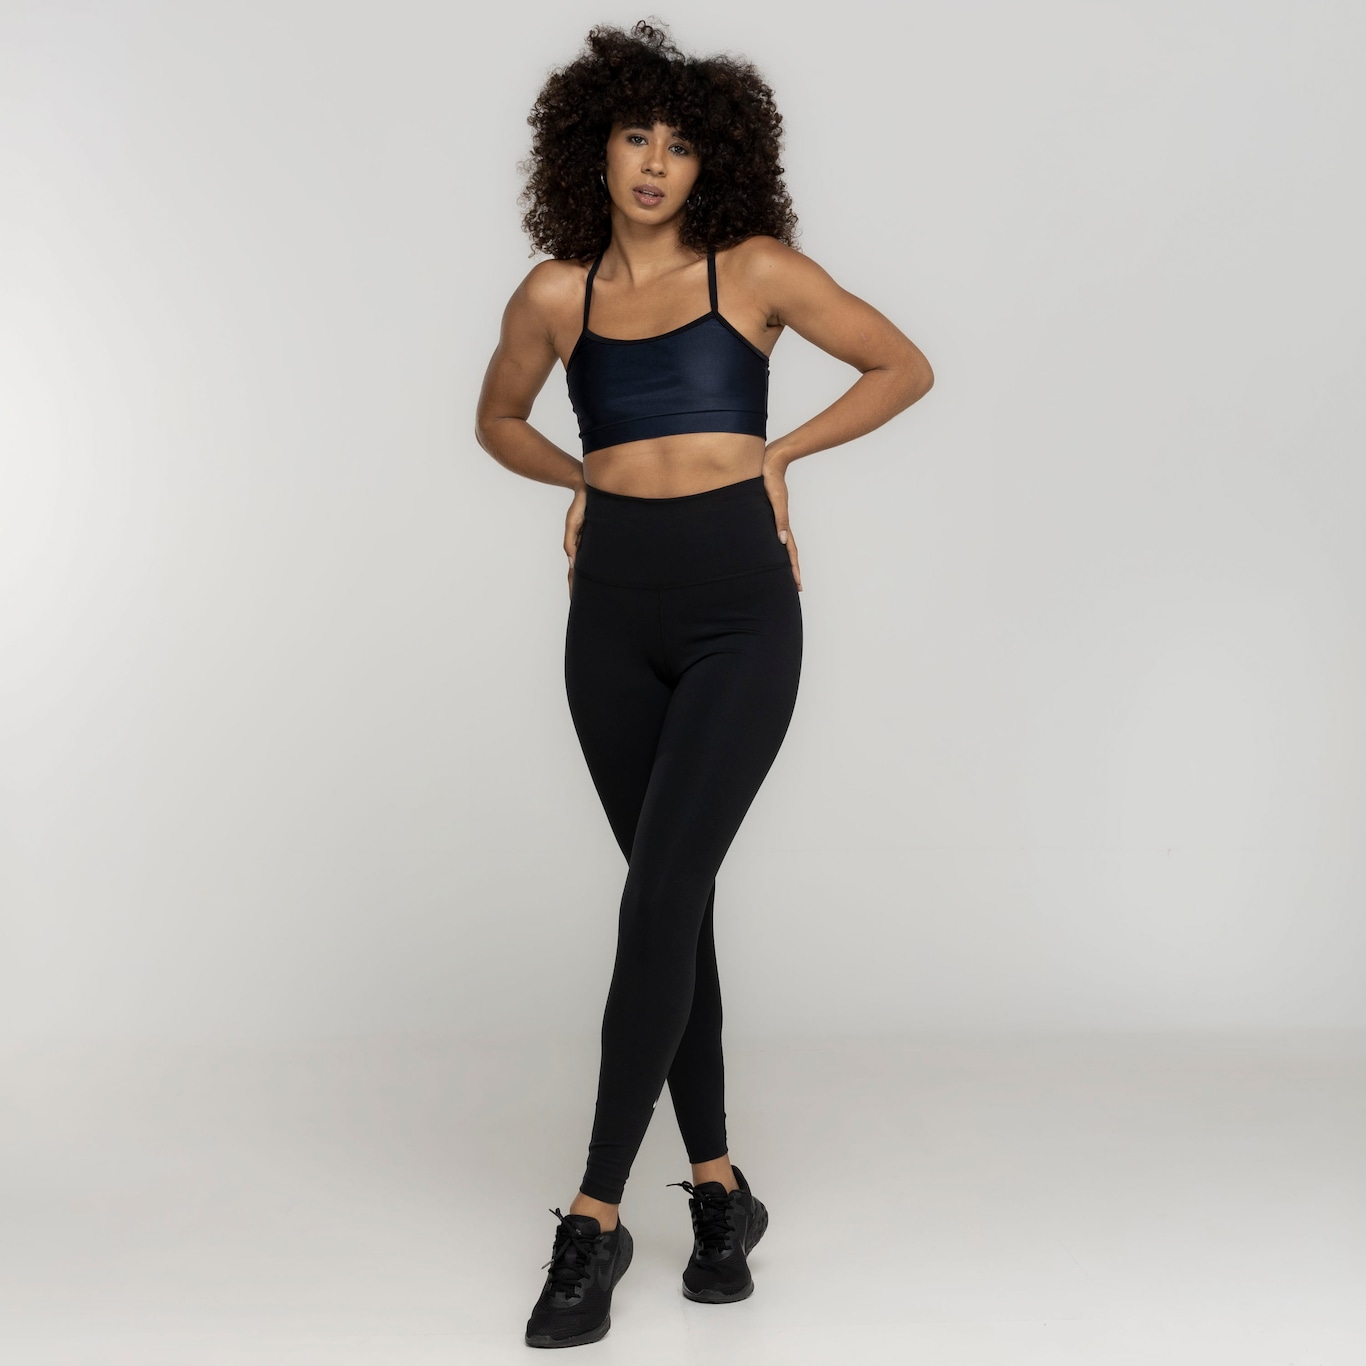 Calça Legging Feminina Nike One Dri-Fit HR TGHT em Promoção